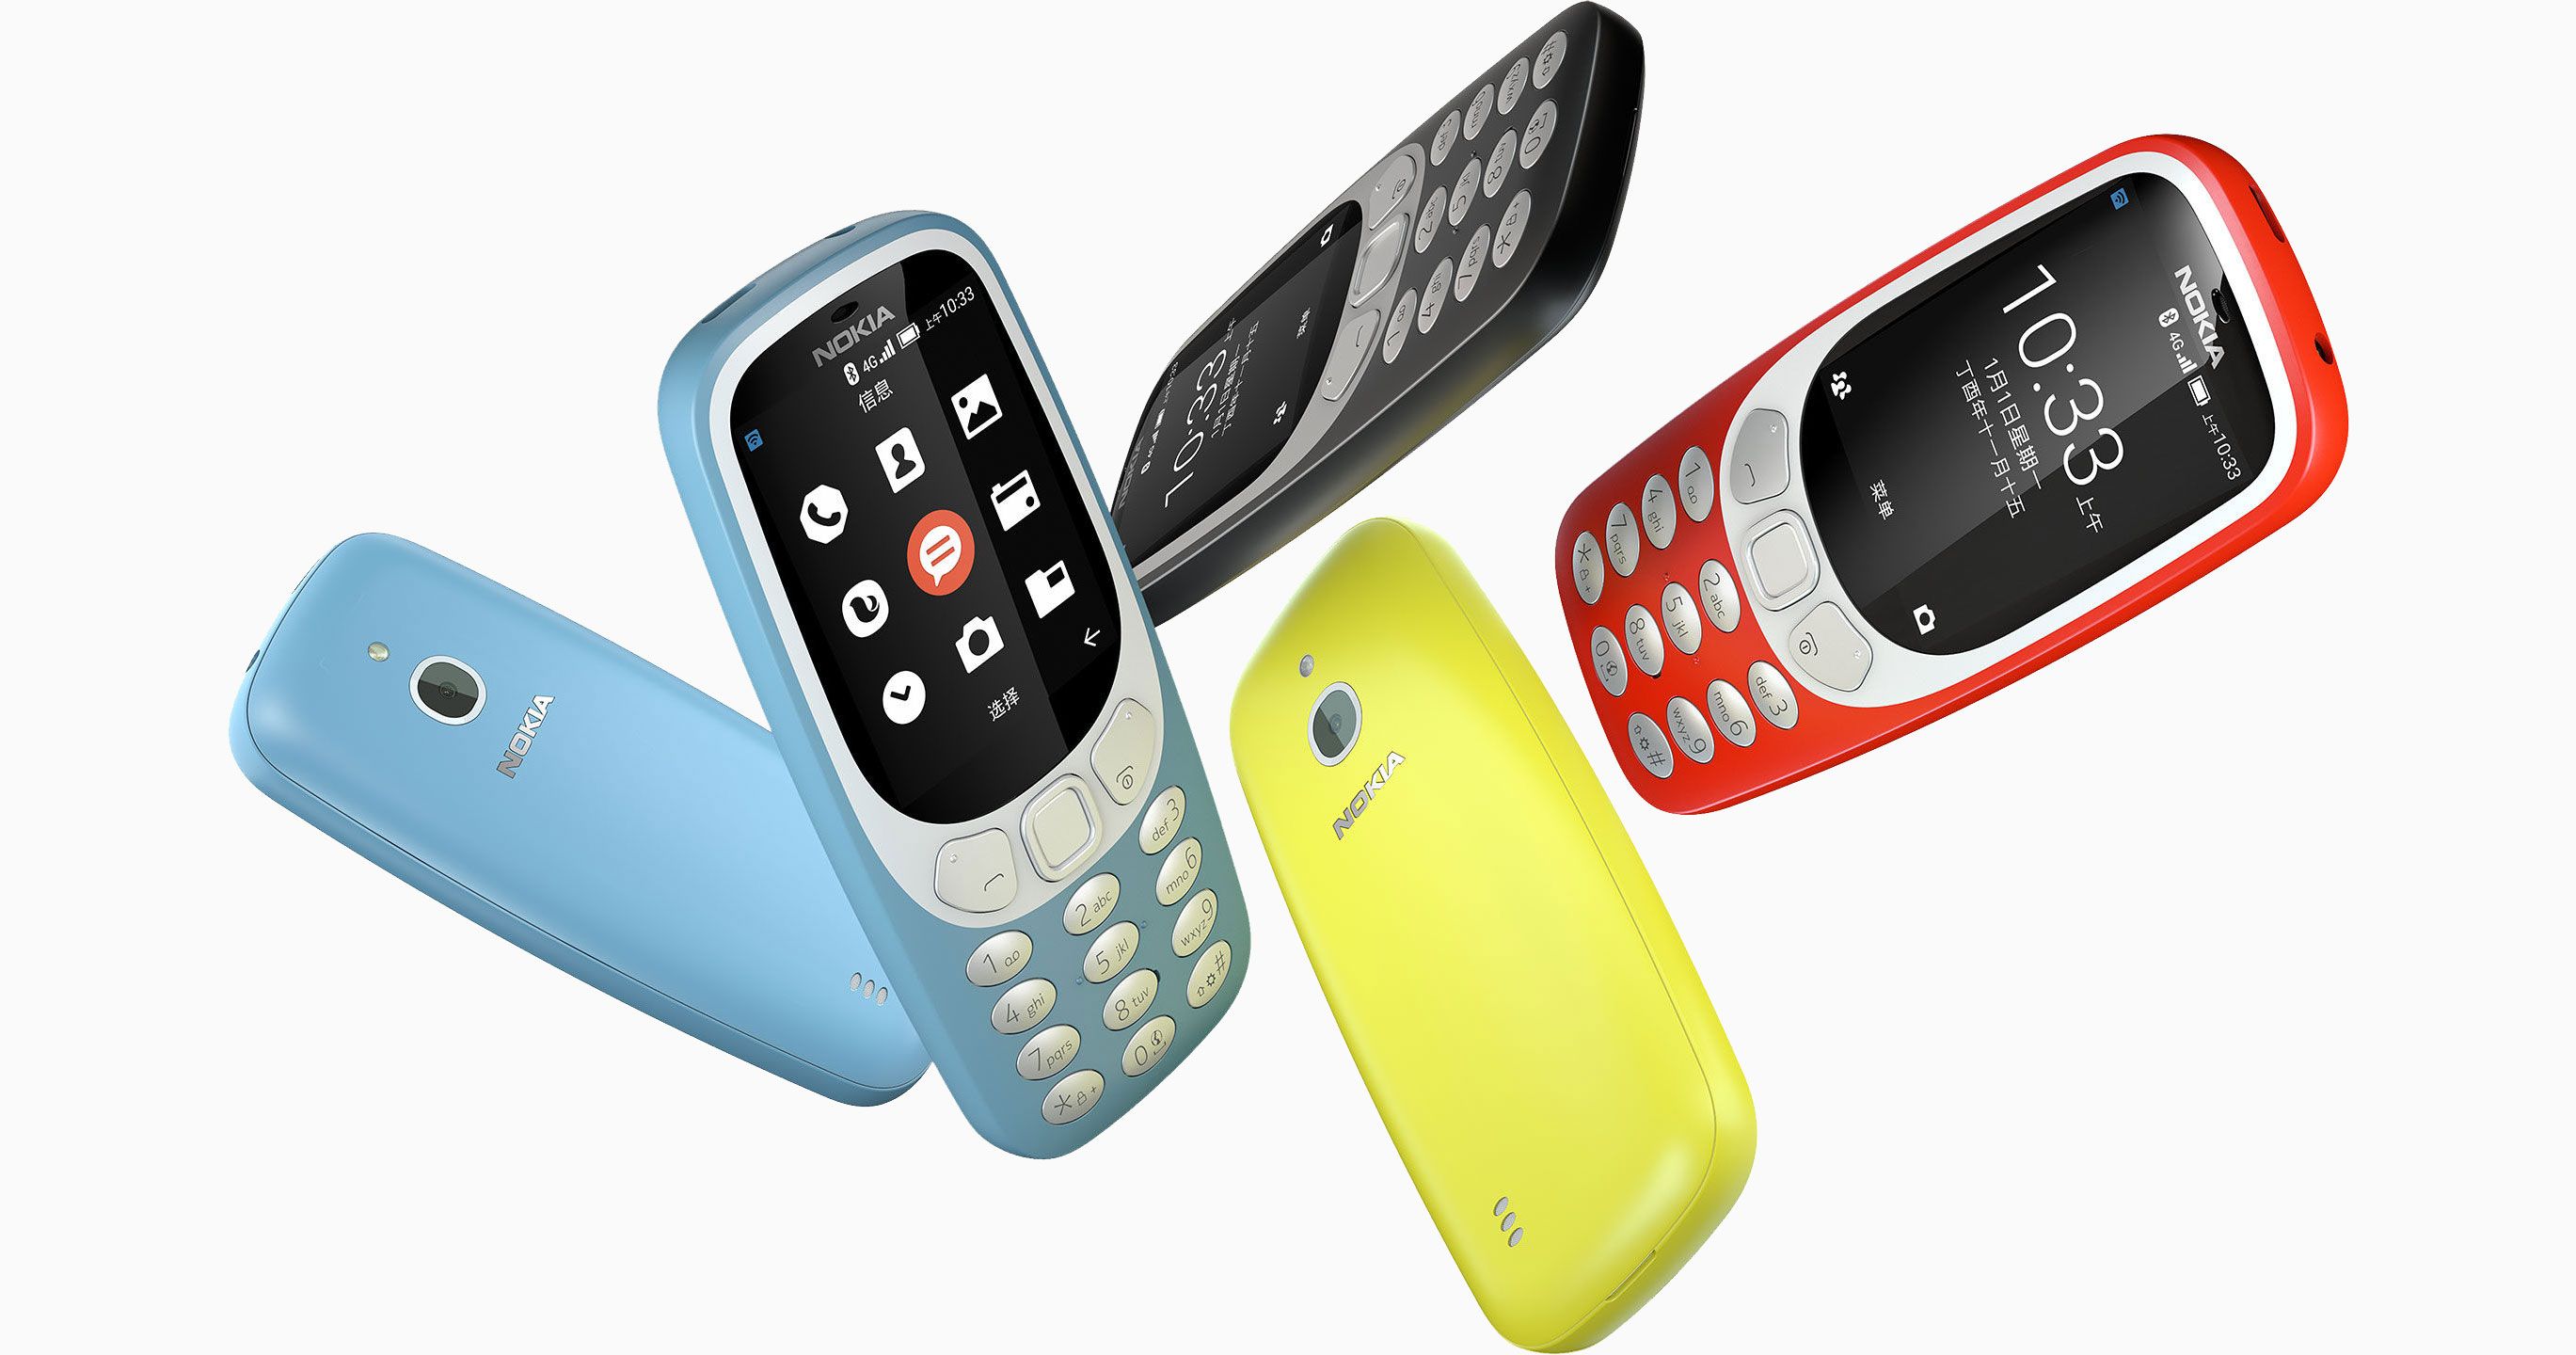 HMD เปิดตัว Nokia 3310 4G รองรับ VoLTE แถมมาพร้อมปล่อย Wi-Fi Hotspot ได้ด้วย